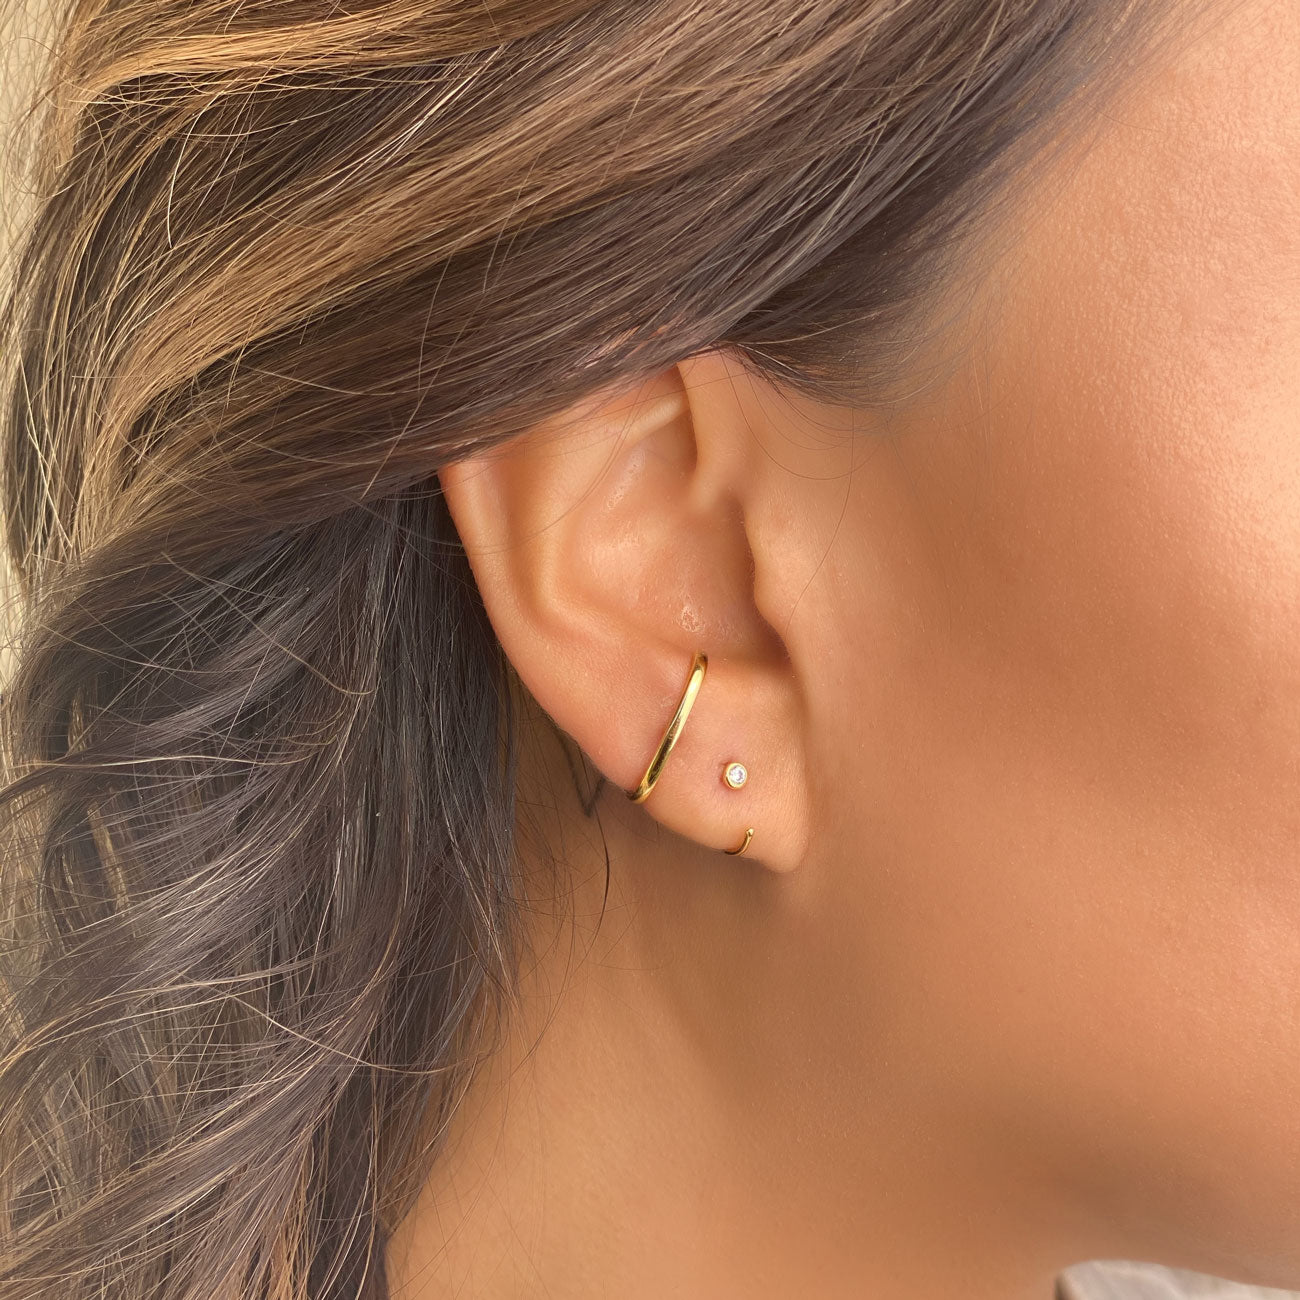 Earring Backs, Silver Extra Large Earring Backs Sterling Adjustable Earring Backs for Heavy Earrings Support (9mm,3 Pairs), Women's, Size: XL, Grey